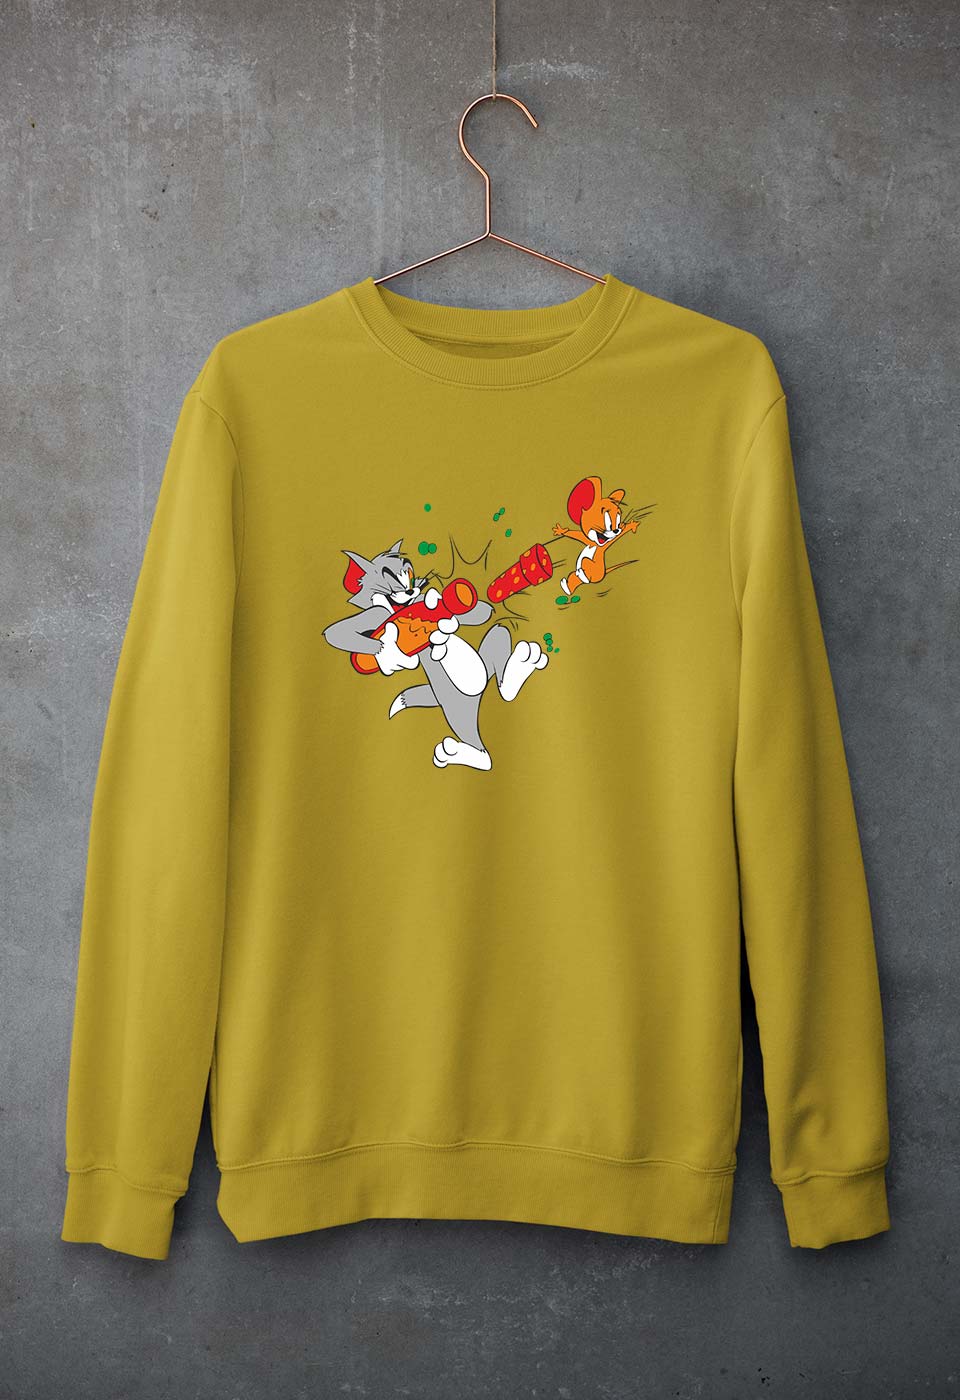 Tom and Jerry Unisex Sweatshirt for Men/Women-S(40 Inches)-Mustard Yellow-Ektarfa.online